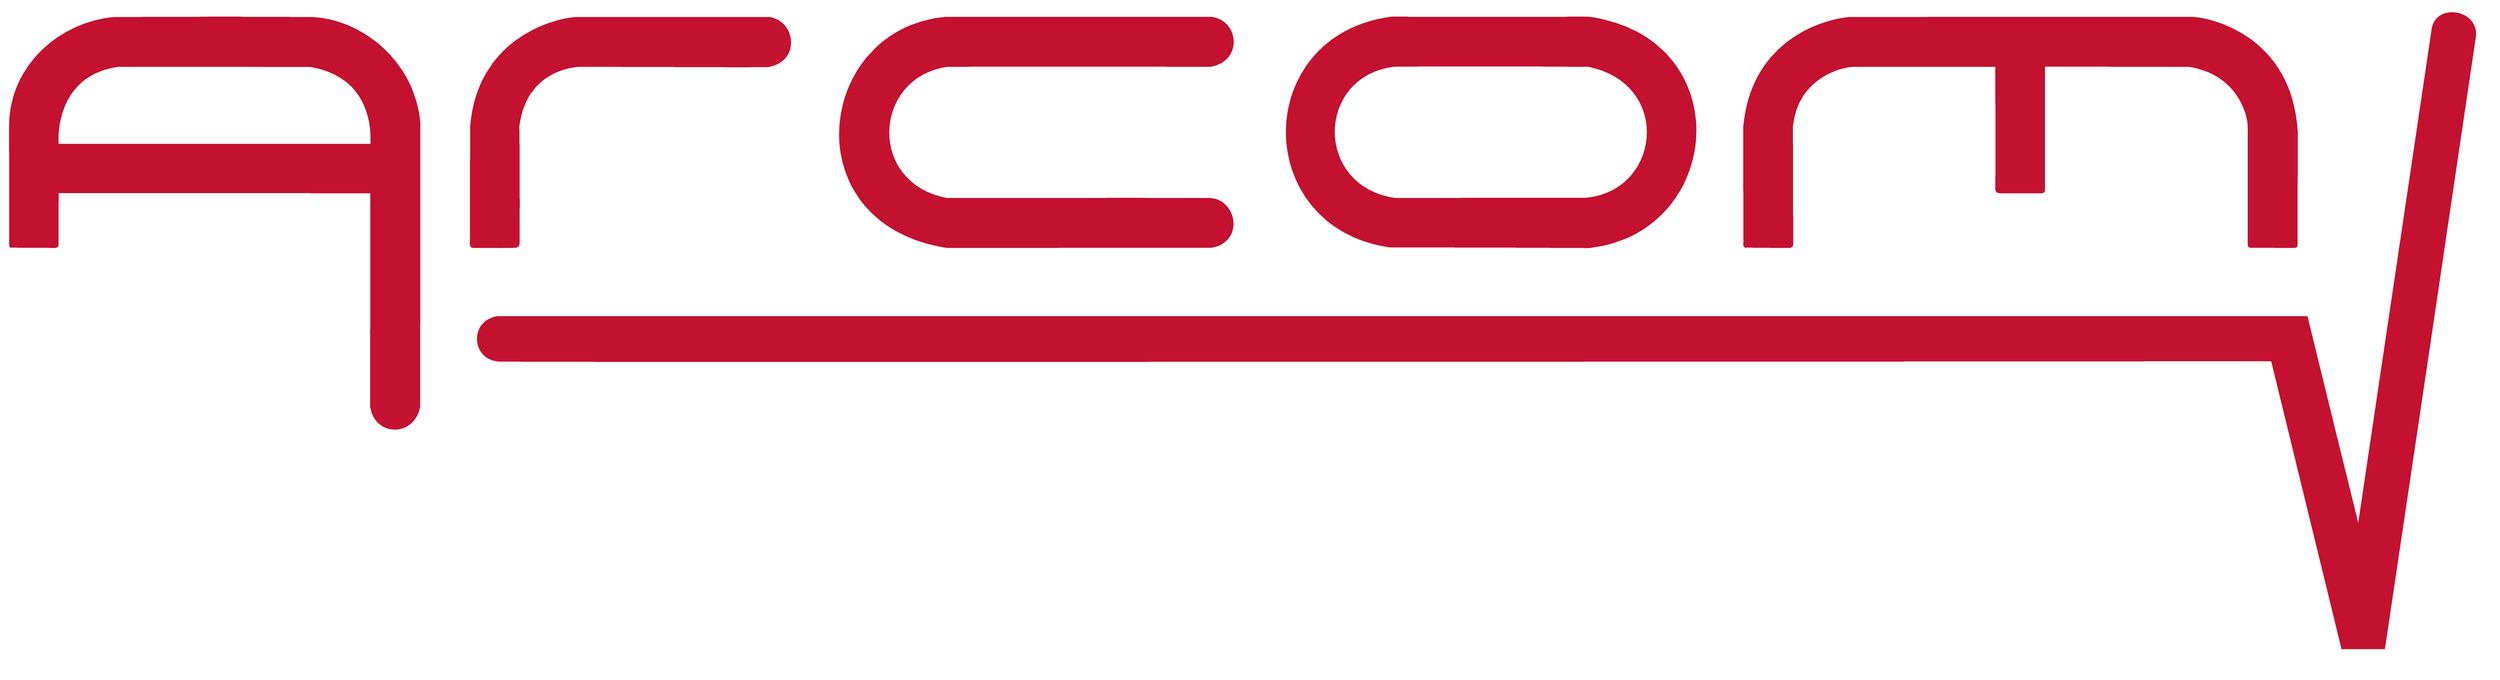 Arcom Labs_logo.jpg